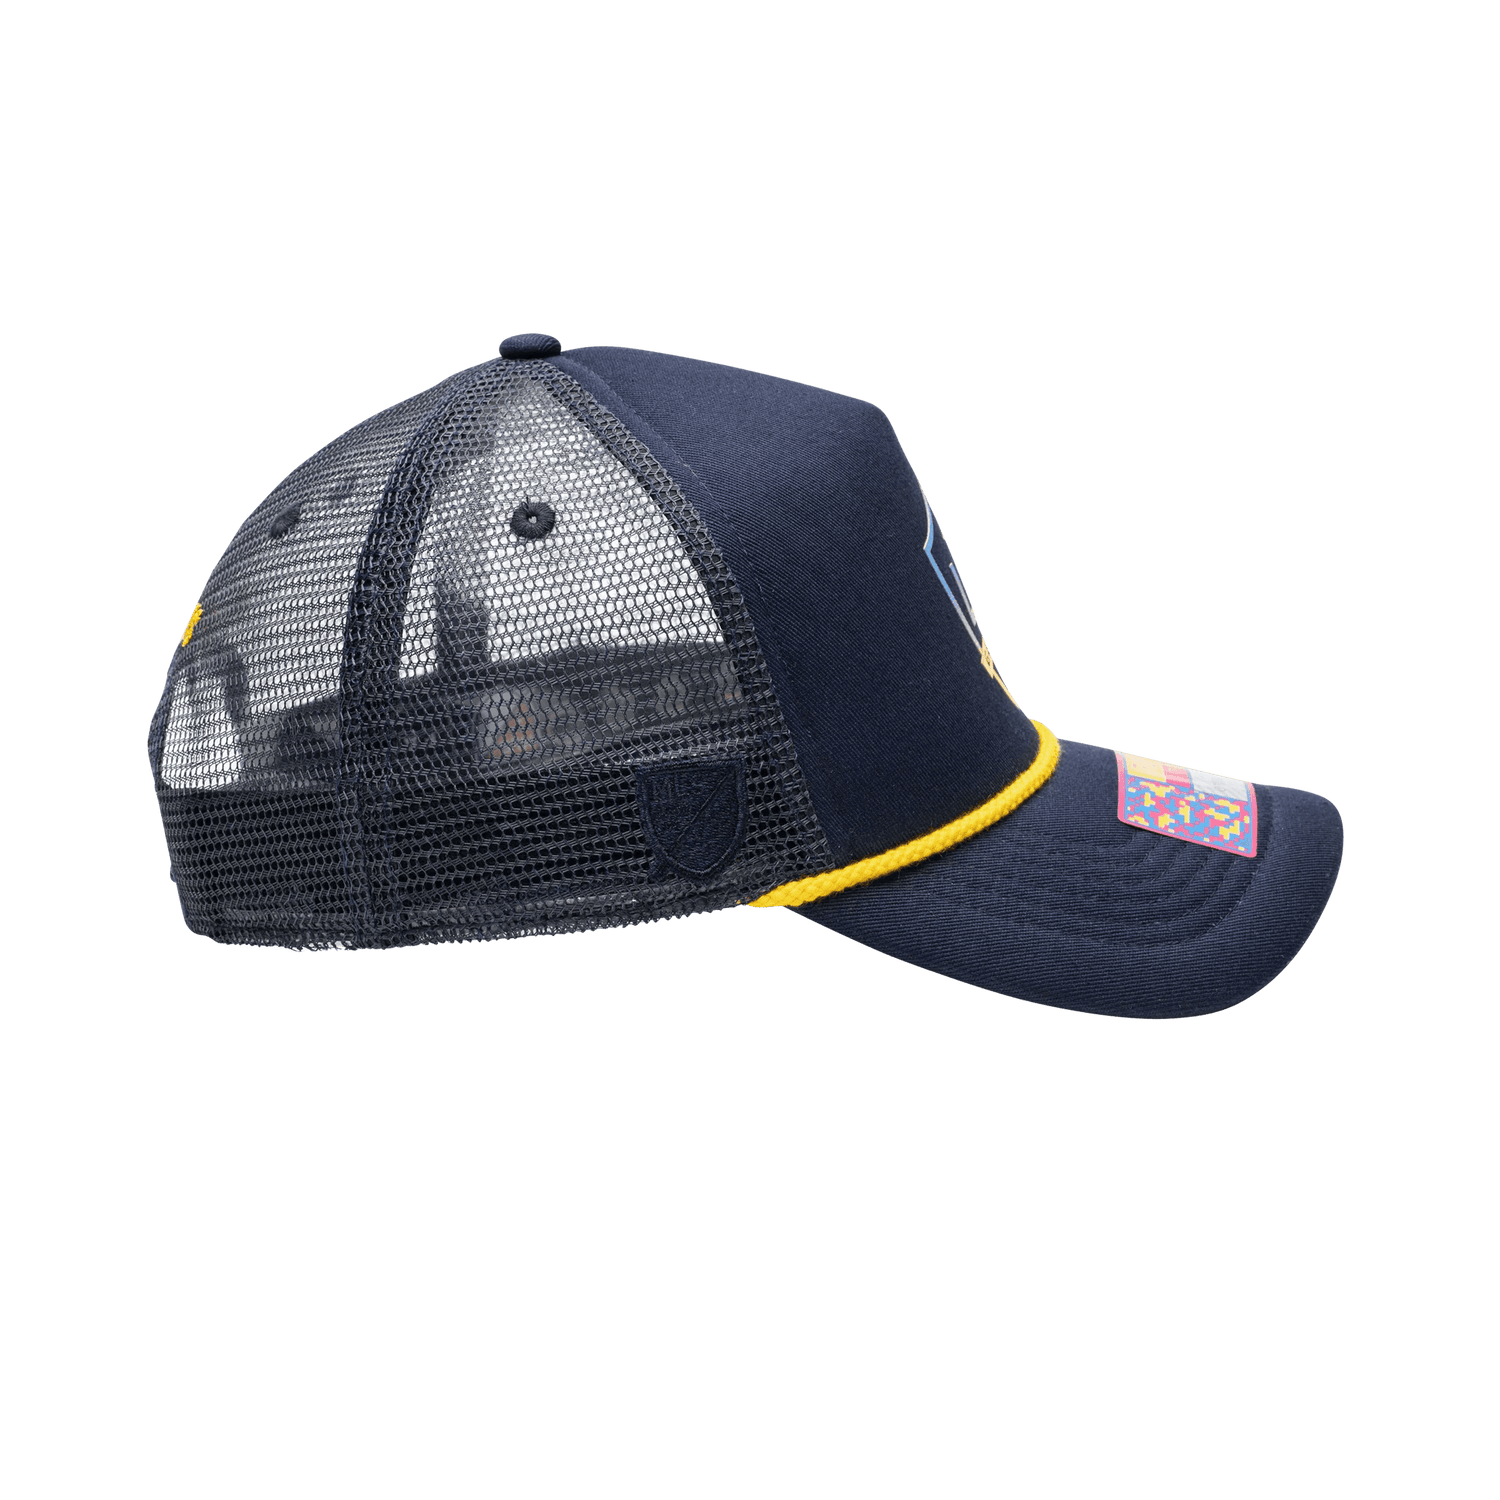 FI Collection LA Galaxy Atmosphere Trucker Hat (Side)